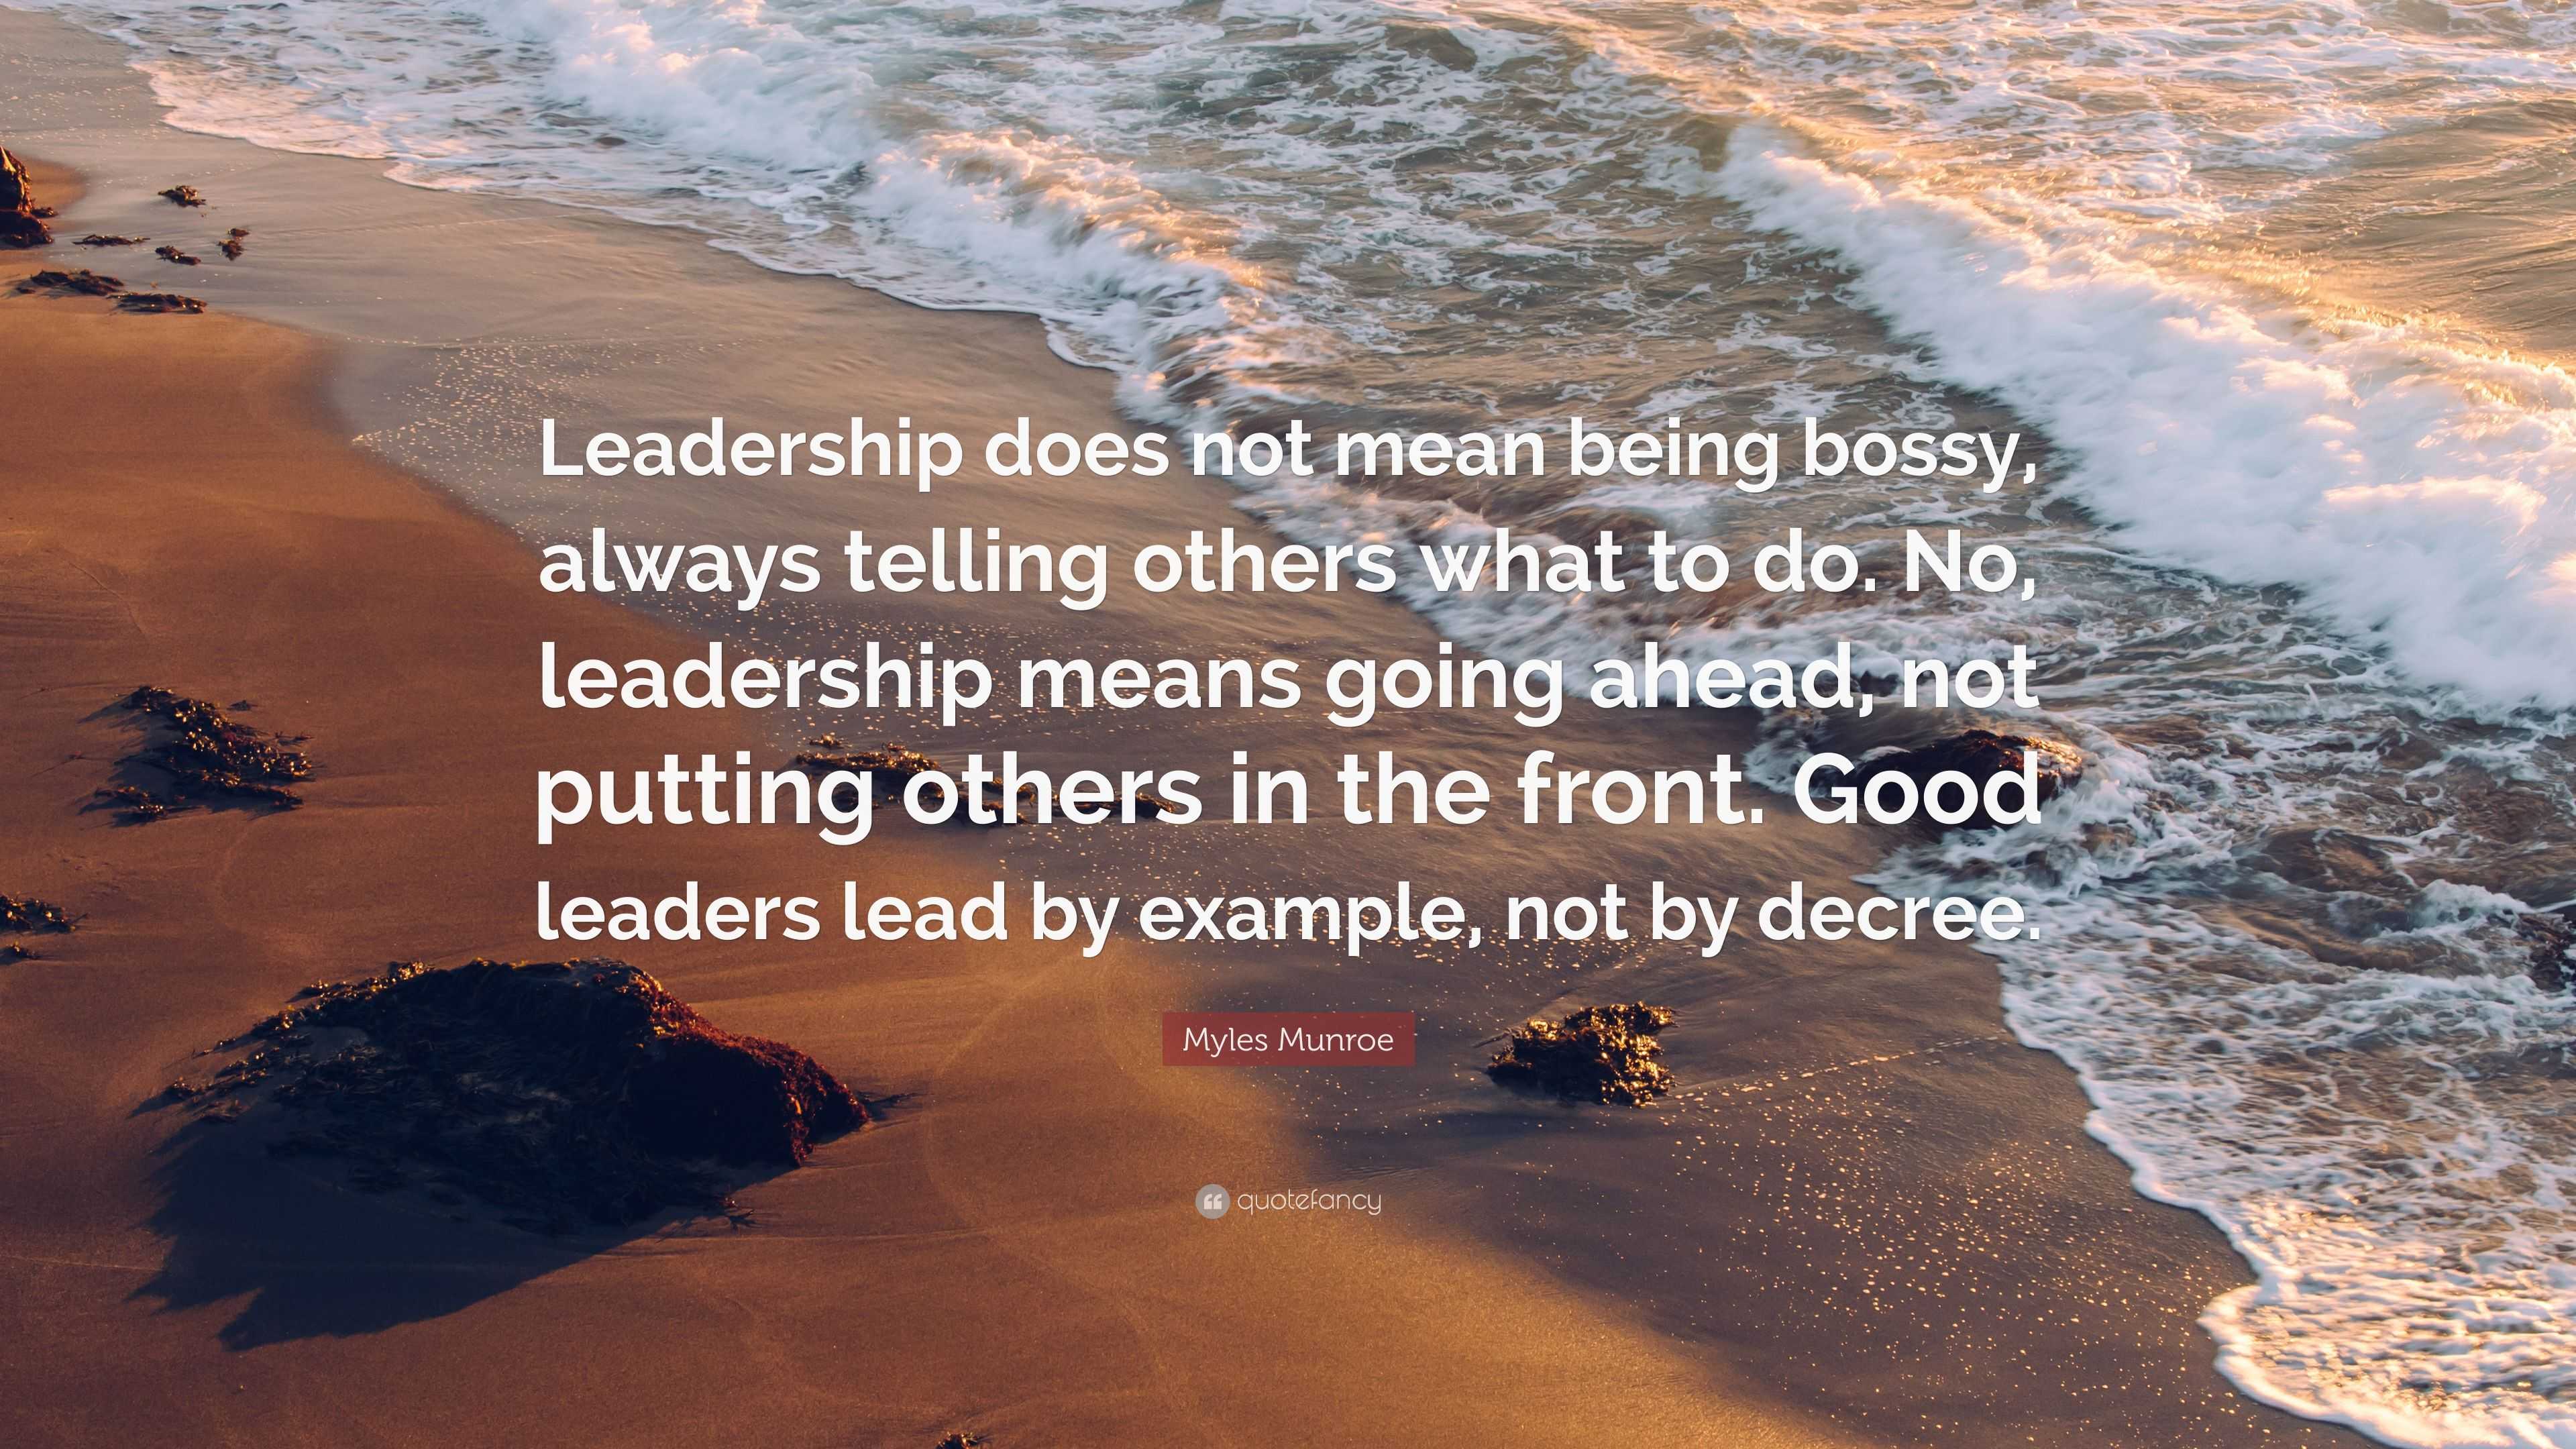 Myles Munroe Quote: “Leadership does not mean being bossy, always ...